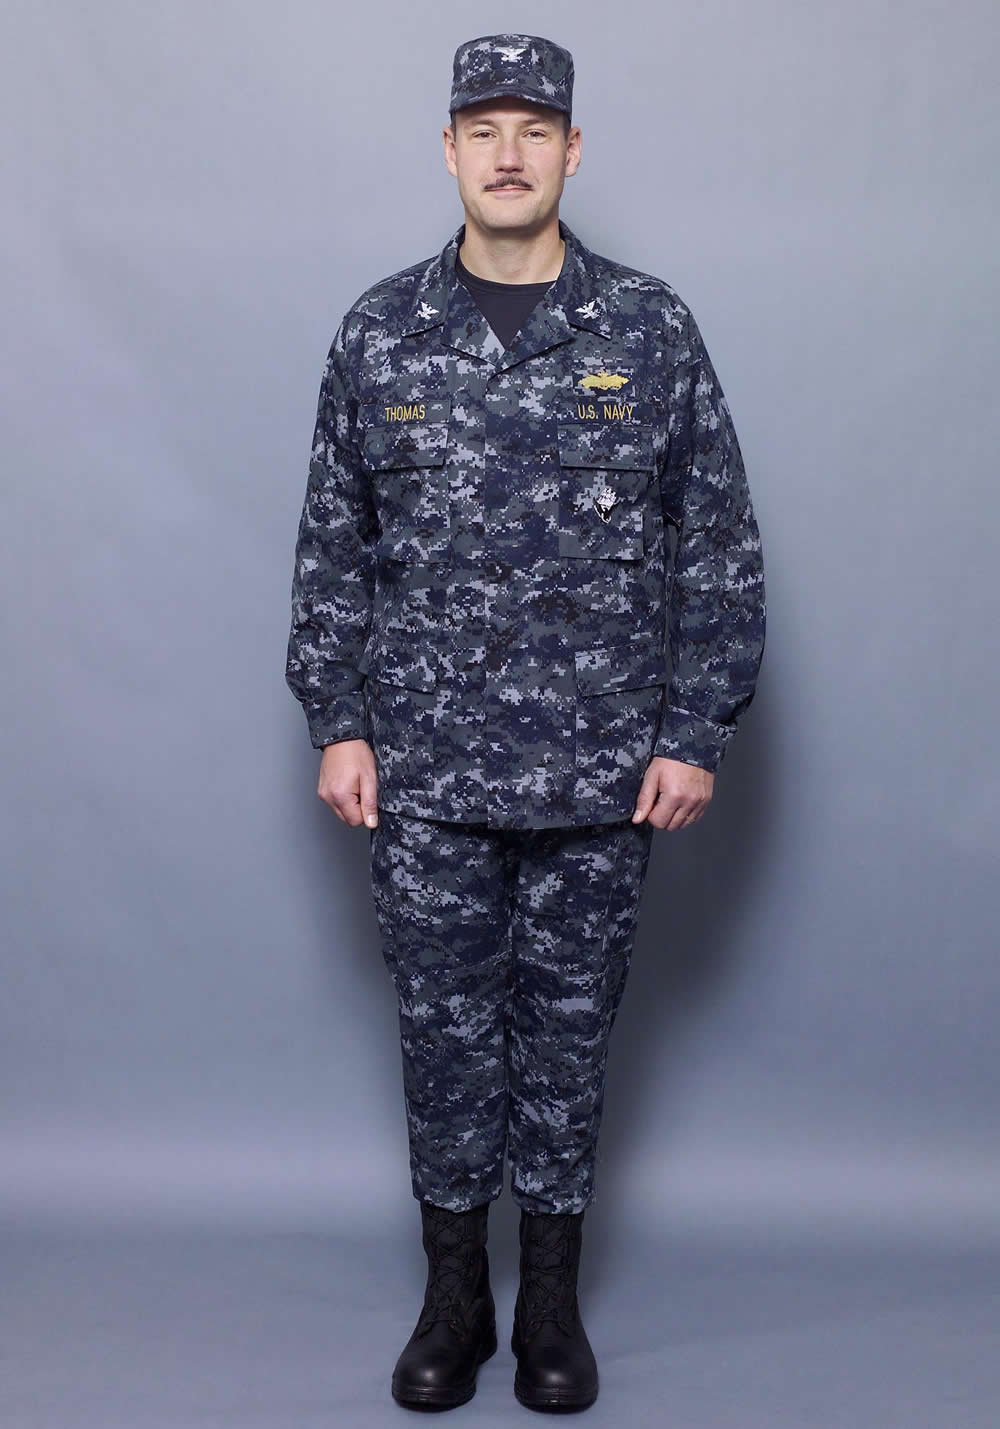 The New Navy Work Uniform